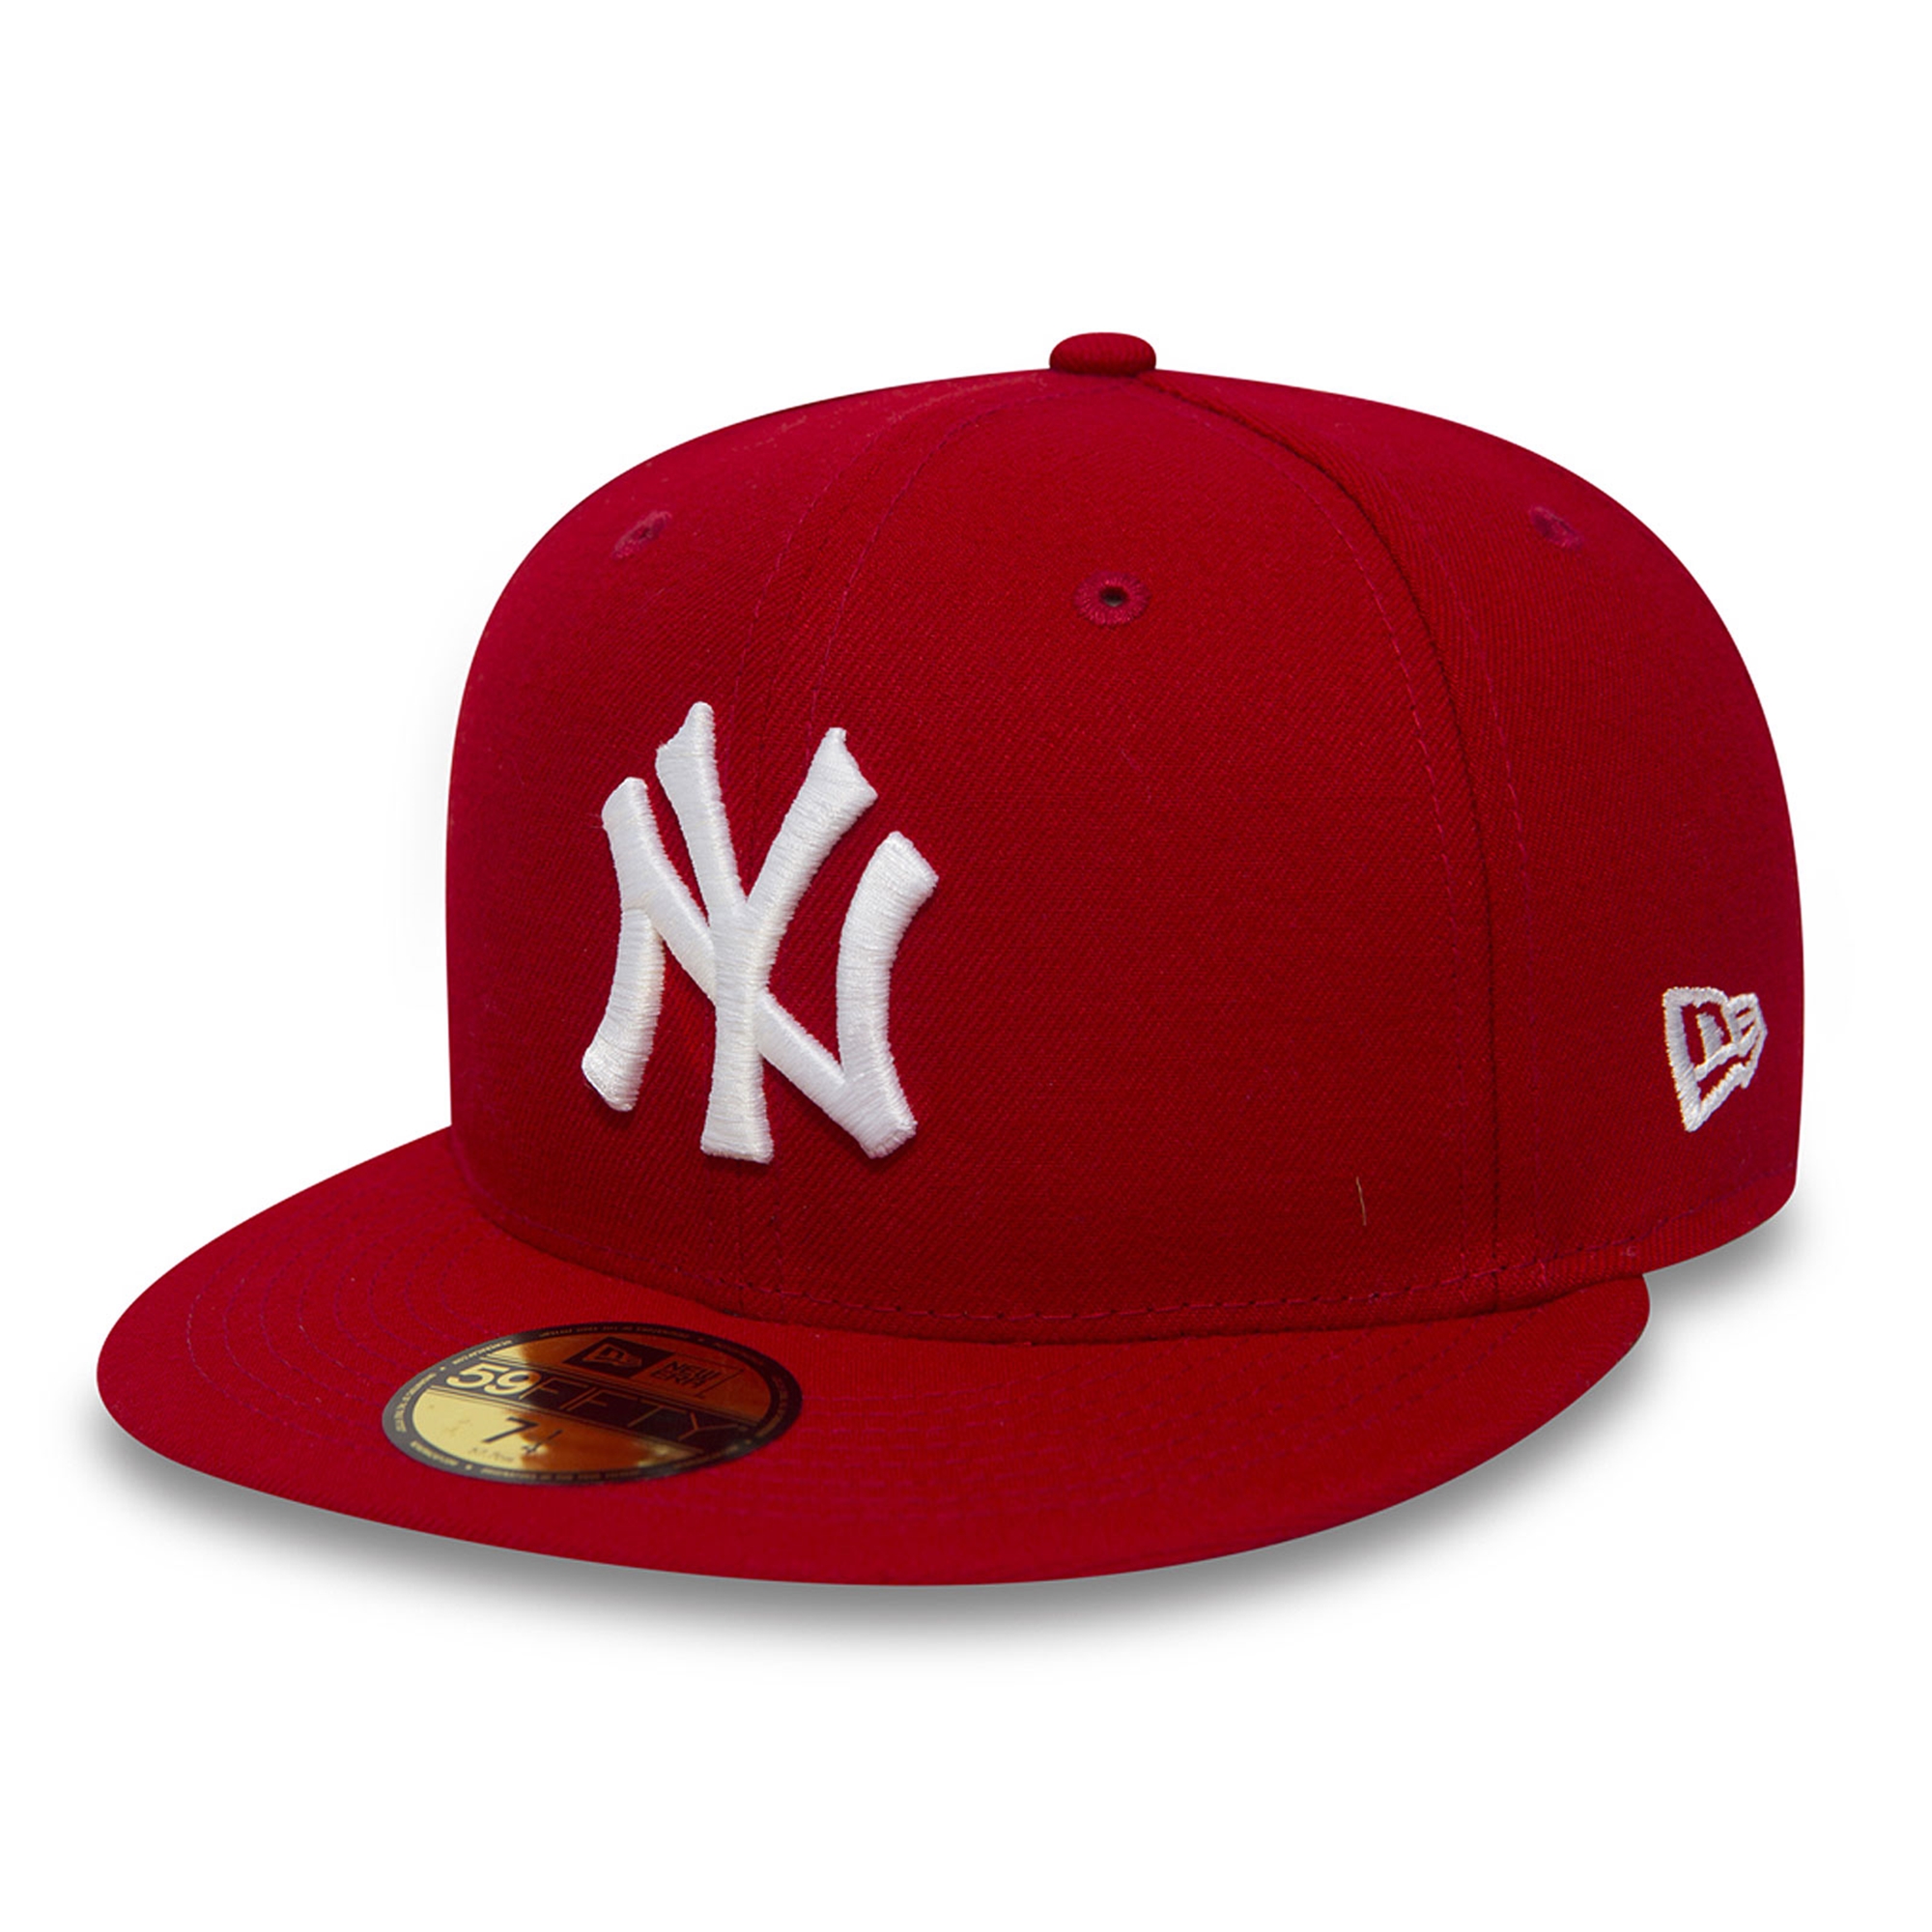 Baseball Basecap New eBay Cap Fitted Cap Yankees MLB York 59Fifty New Era |